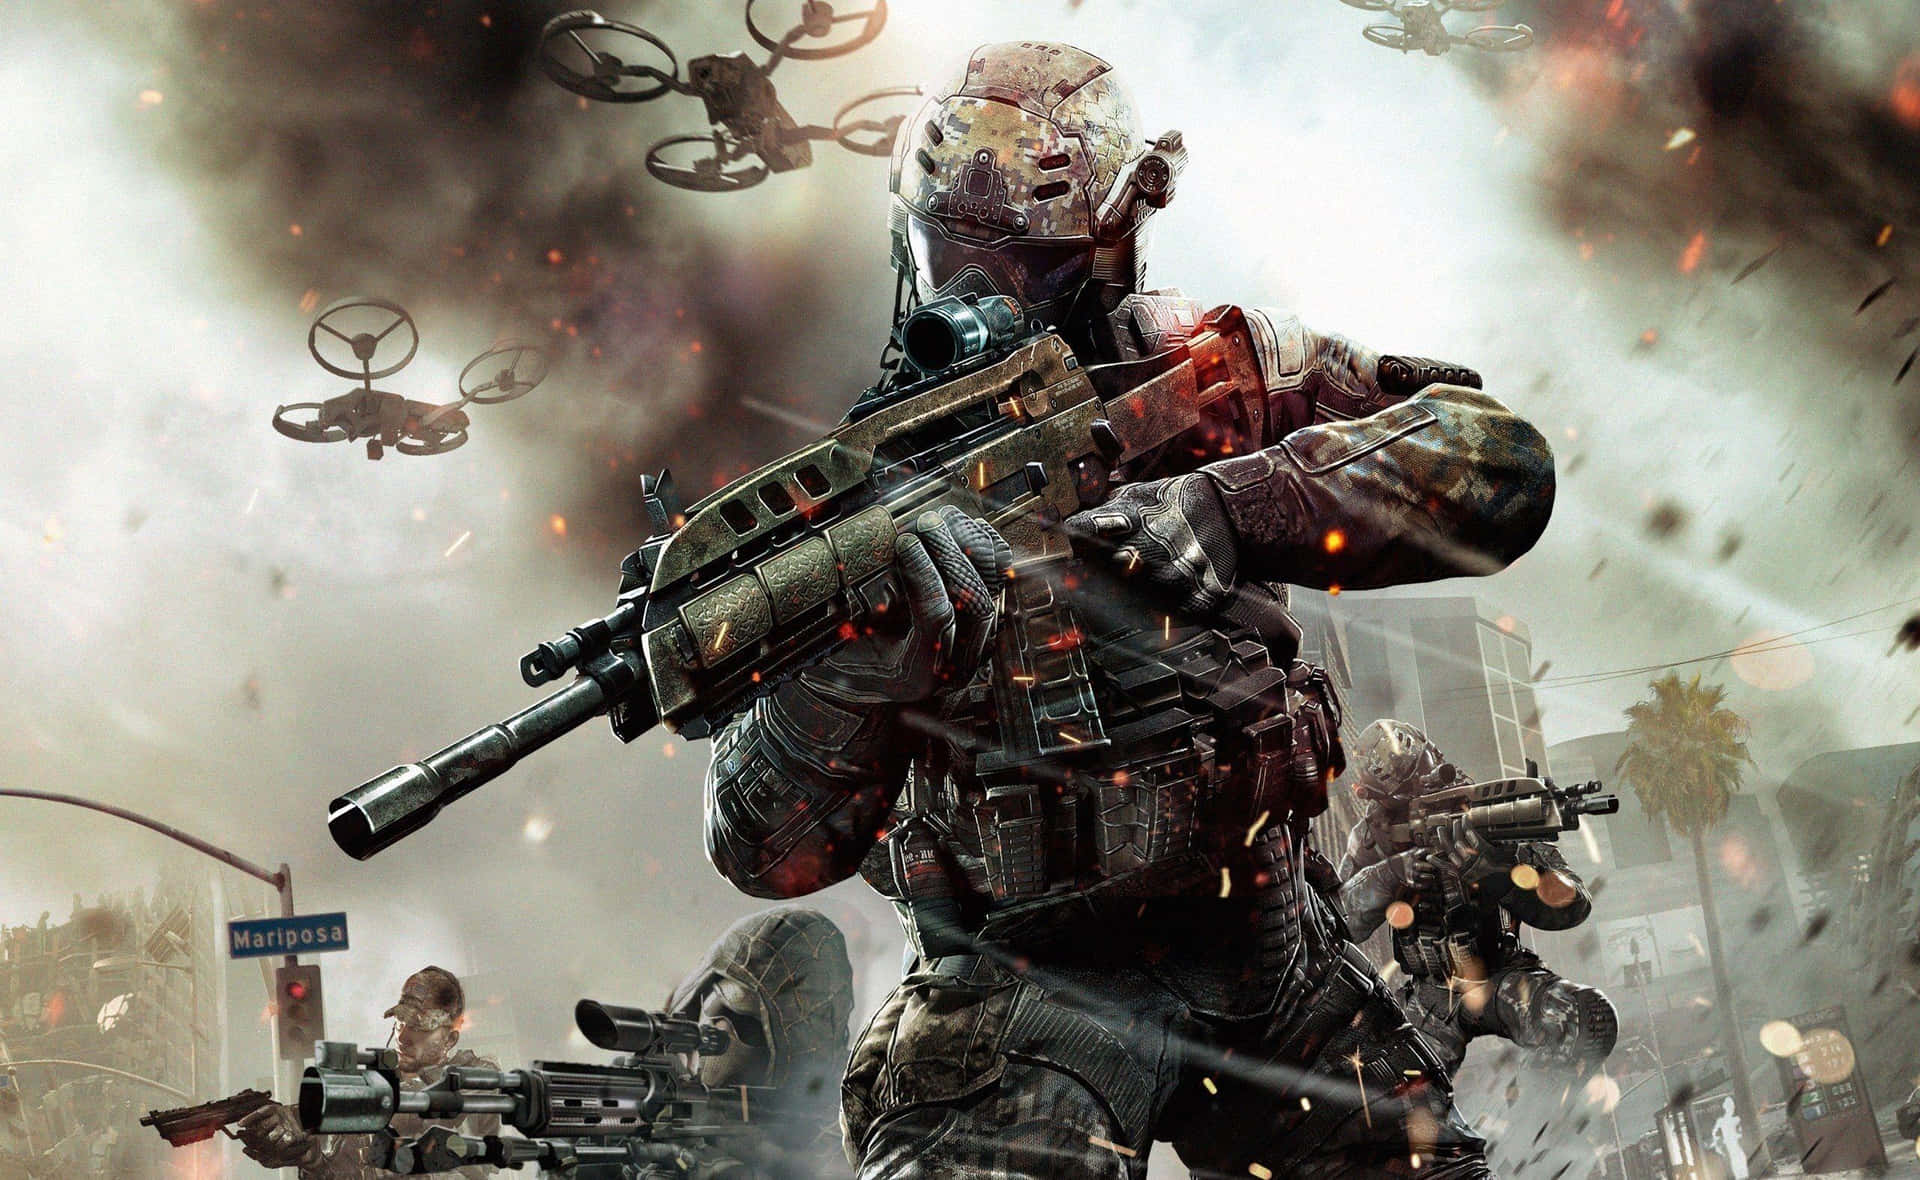 Viviintense Combattimenti Multiplayer In Call Of Duty